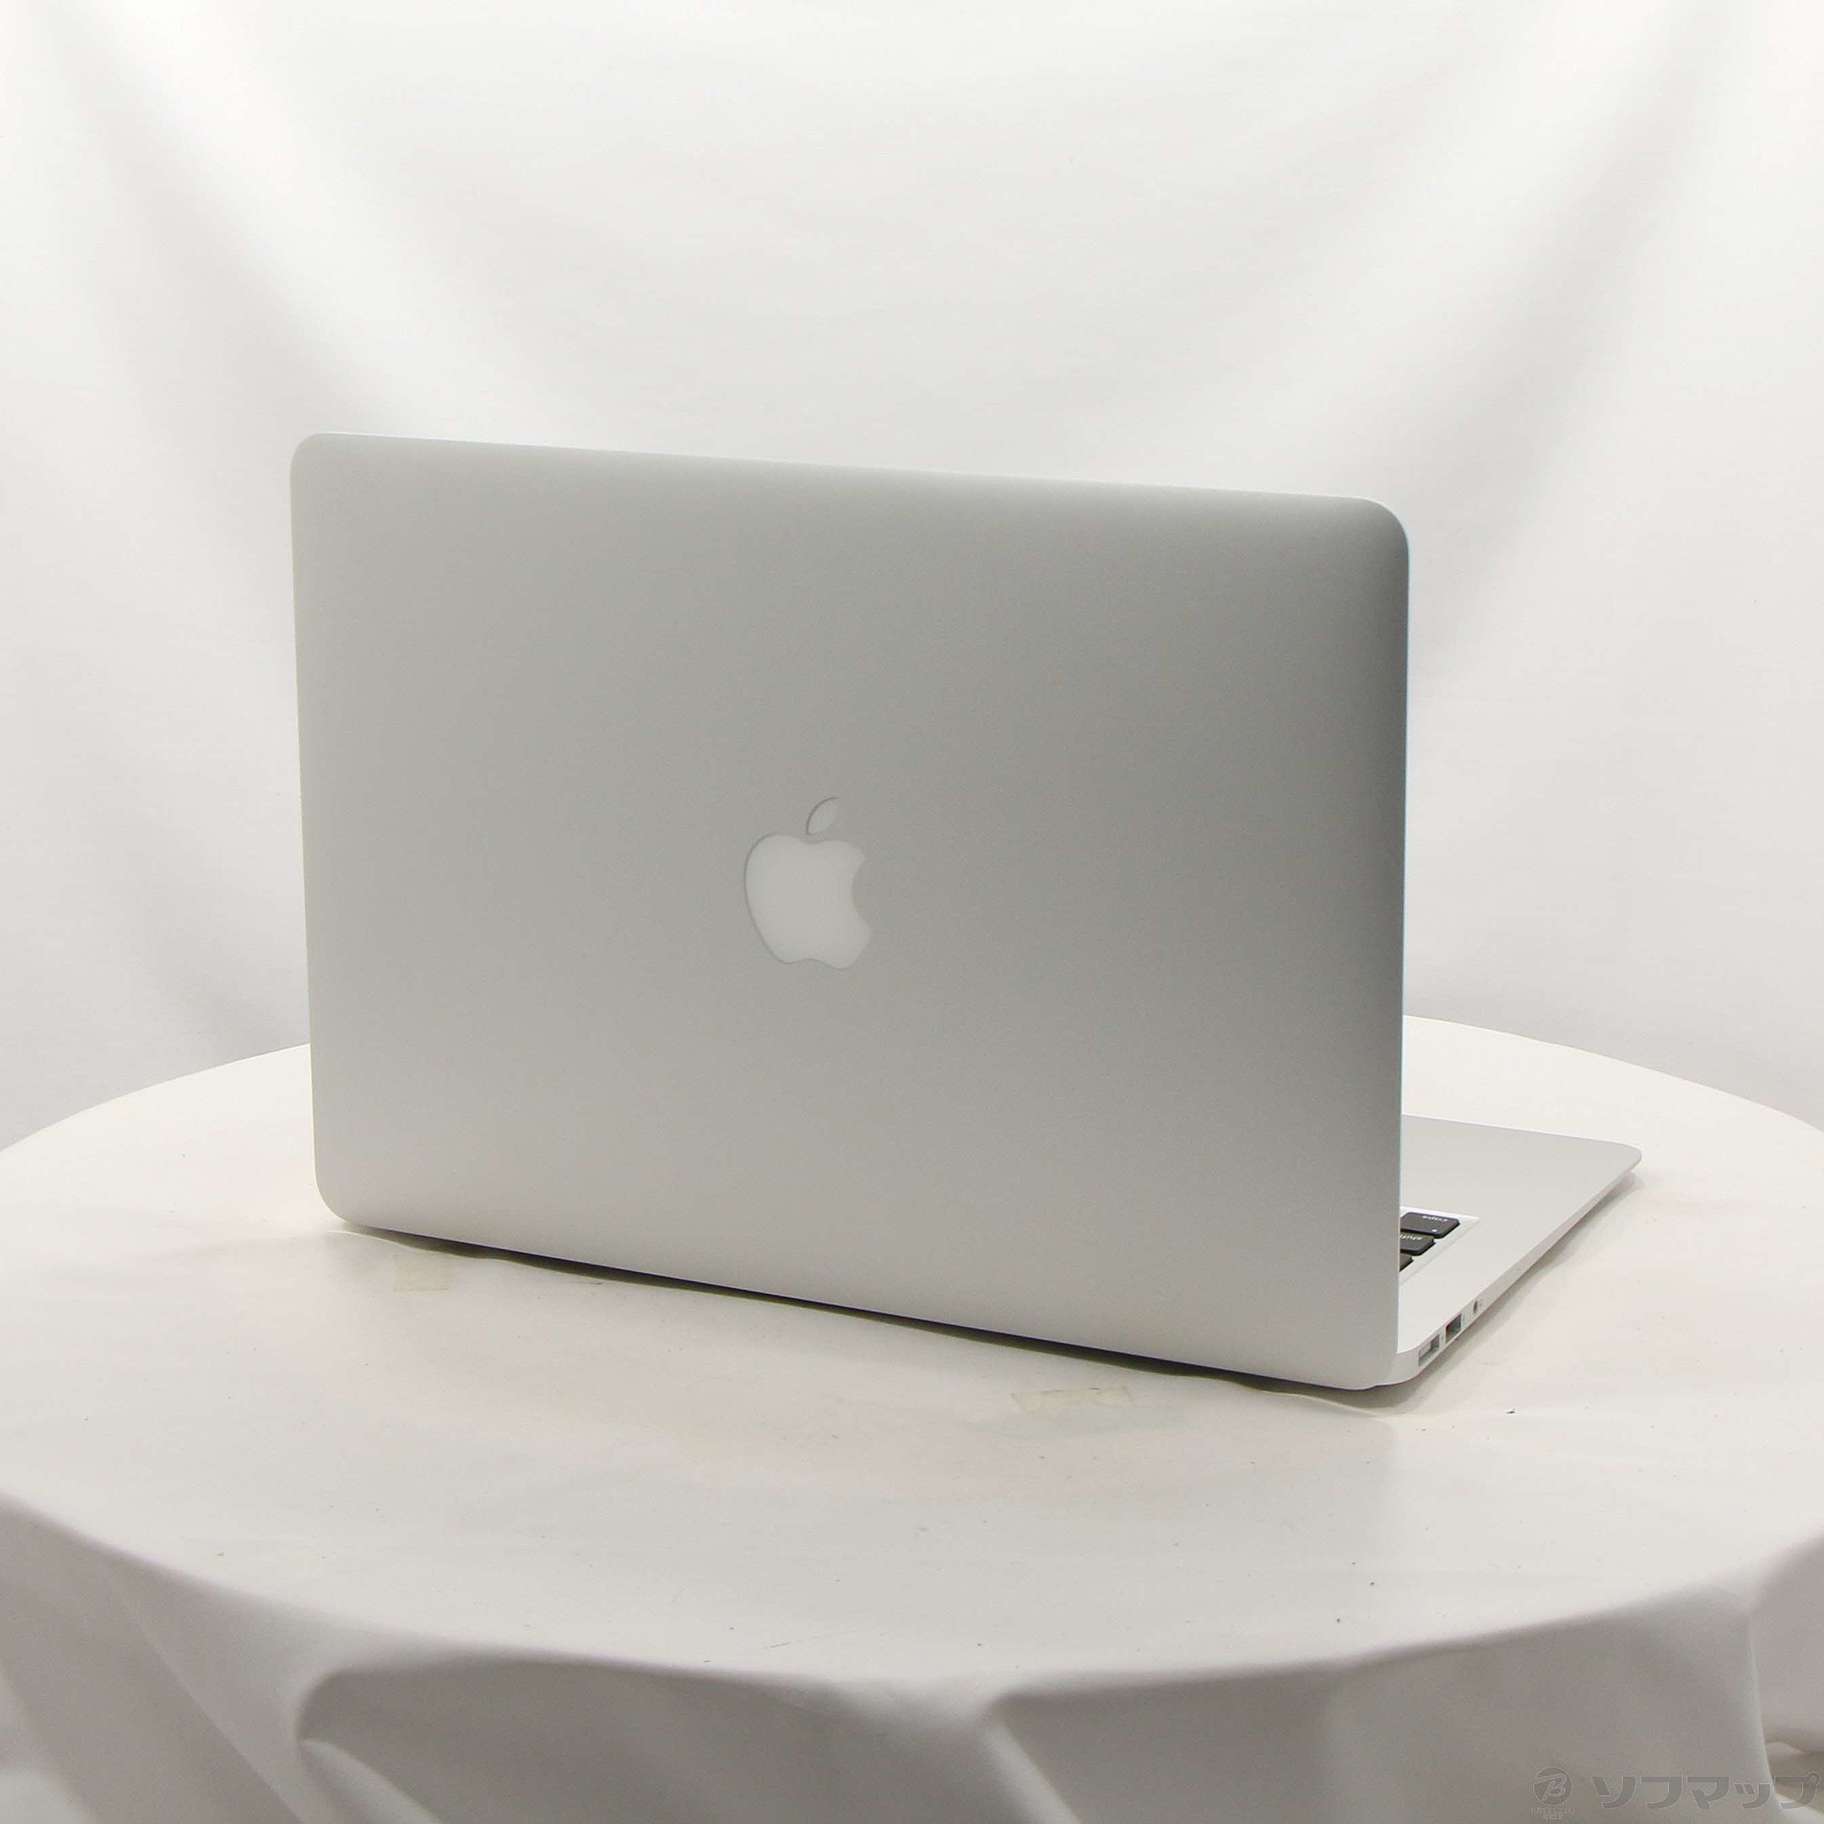 MacBook Air 13-inch,Early 2015〈MJVE2J/A〉